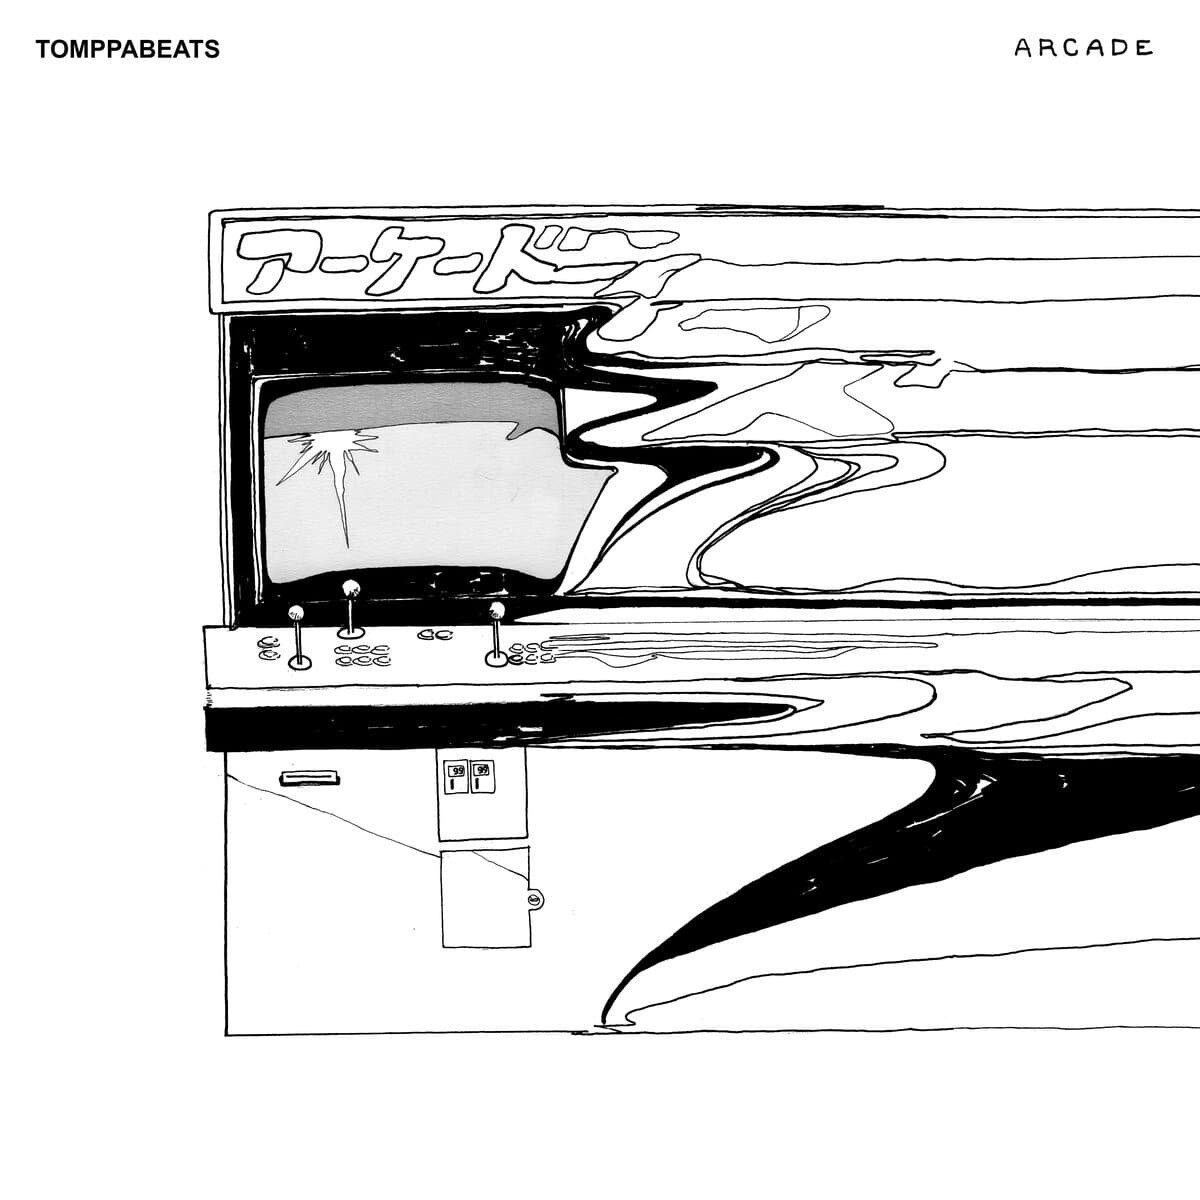 tomppabeats - Arcade